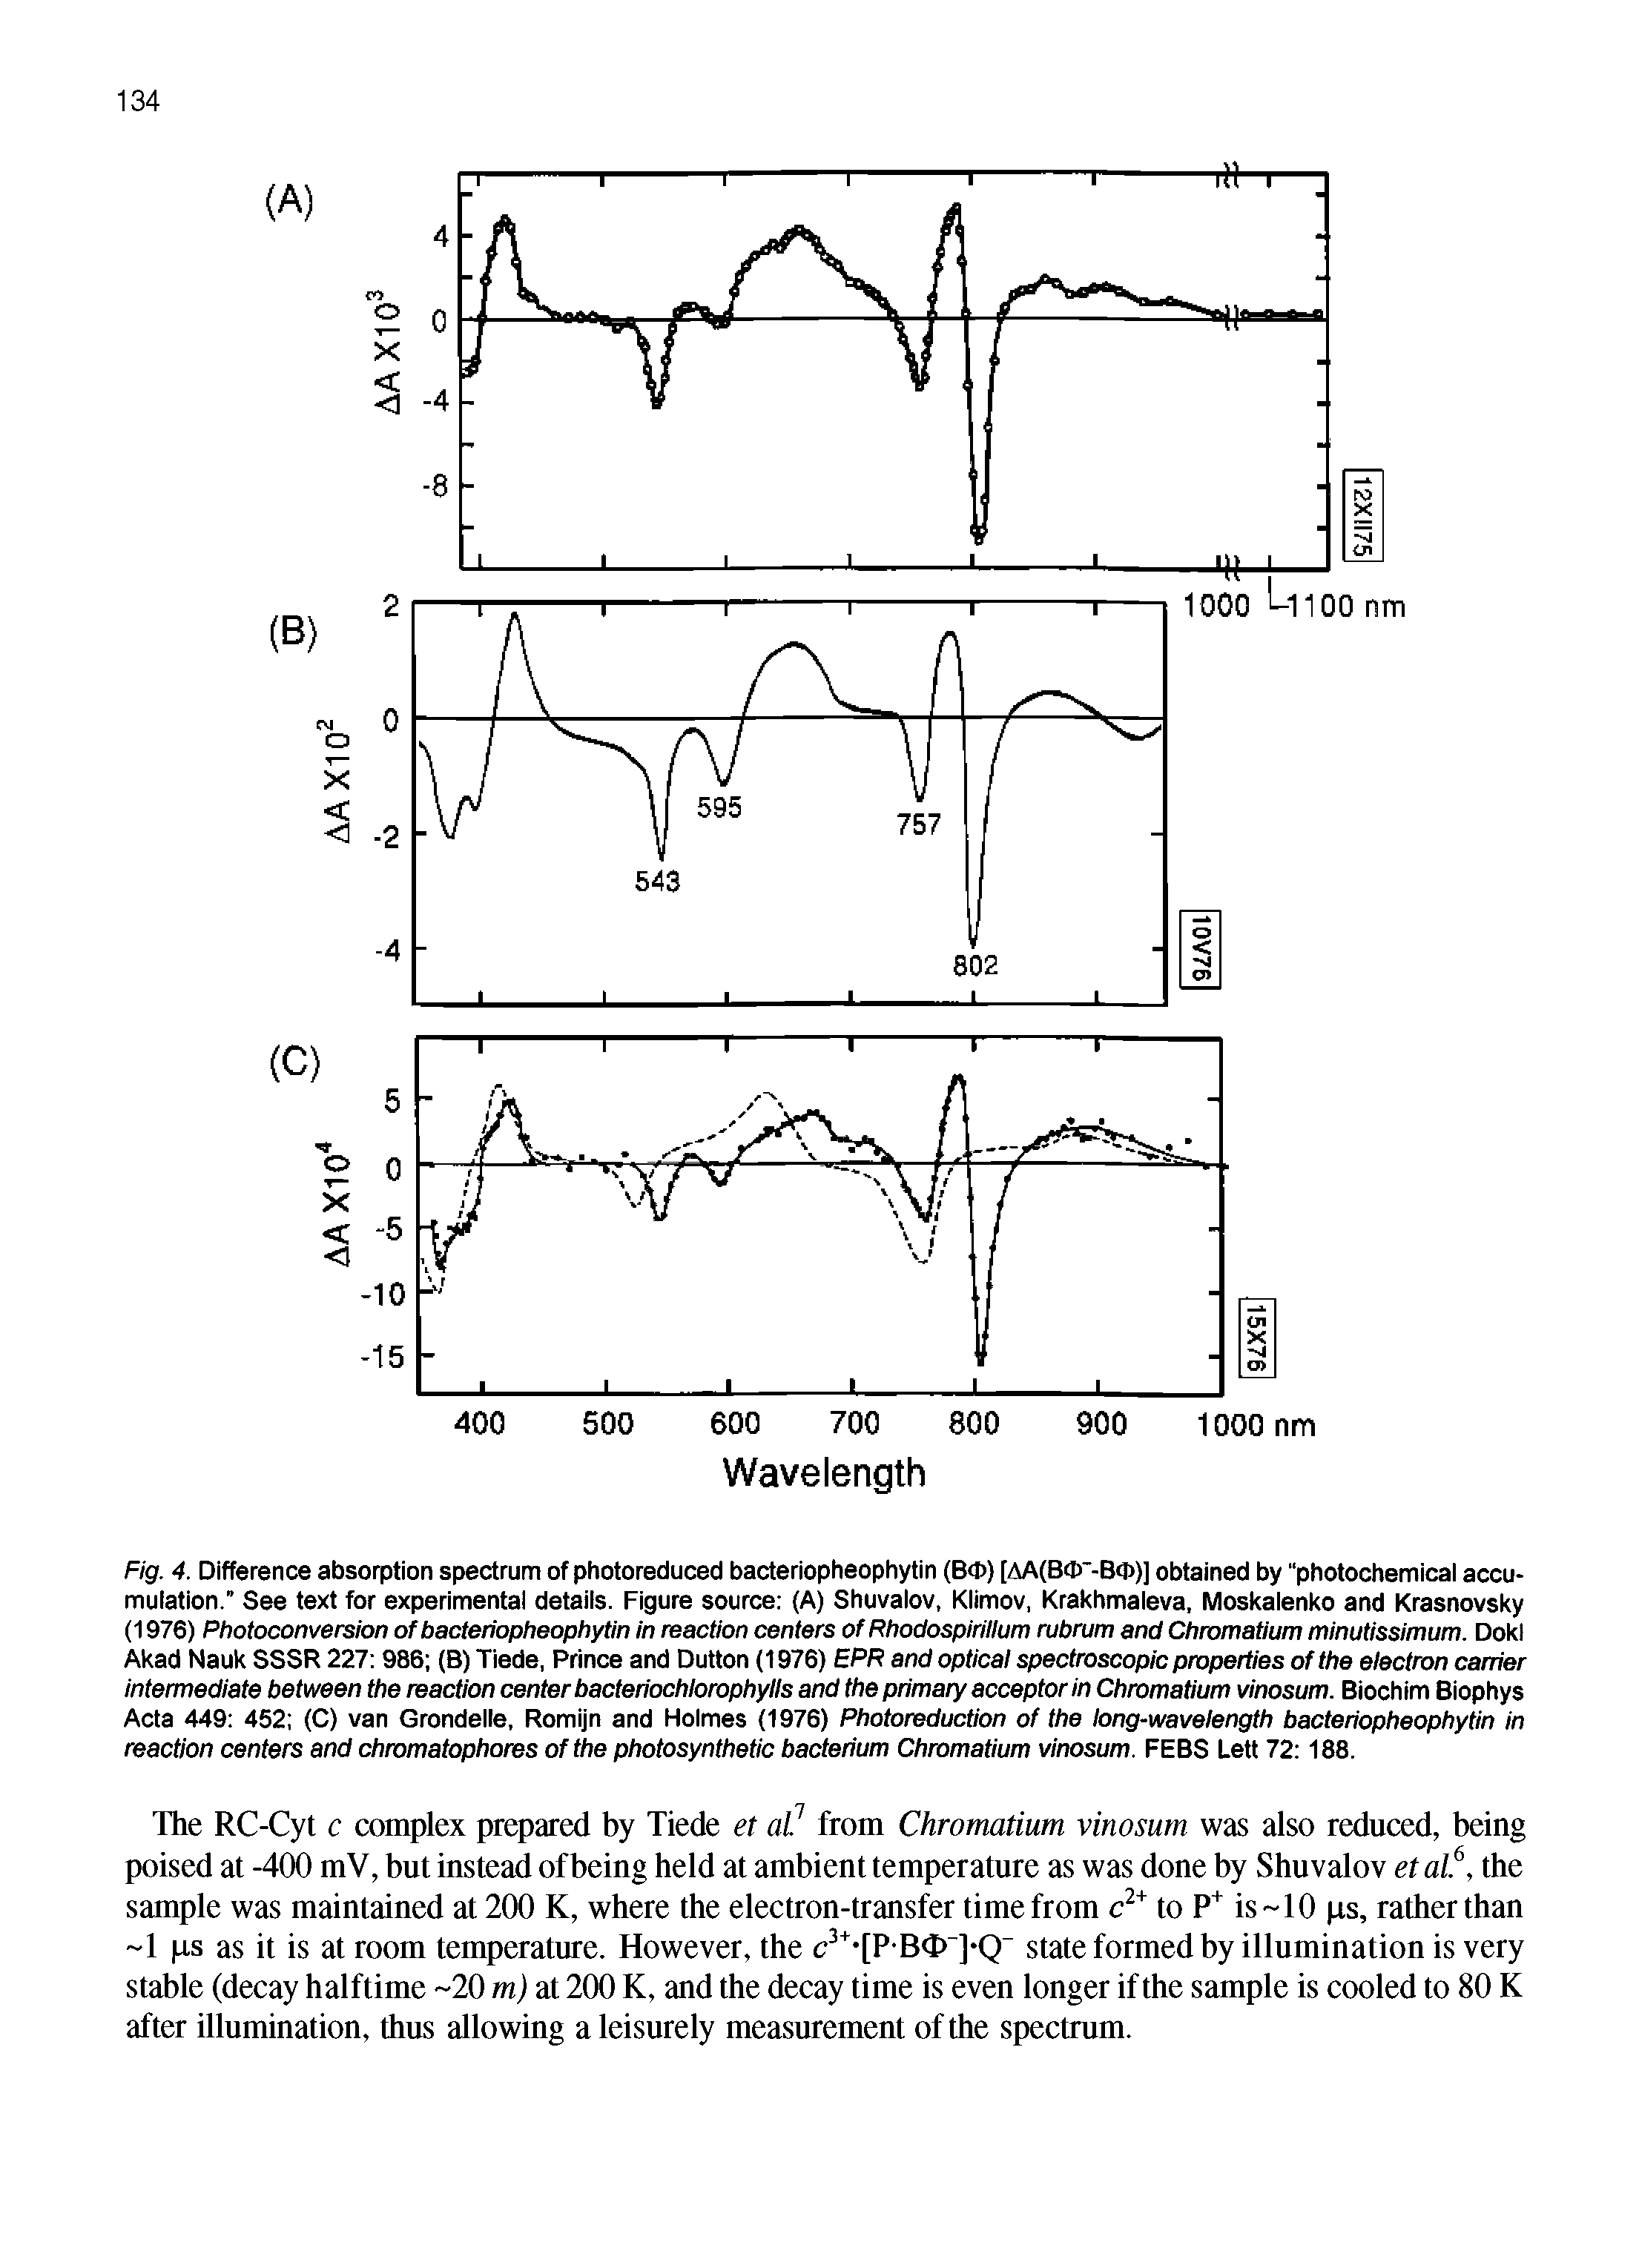 Fig. 4. Difference absorption spectrum of photoreduced bacleriopheophytin (B<D) [AA(BO -Bd))] obtained by photochemicai accumulation. See text for experimental details. Figure source (A) Shuvalov, Klimov, Krakhmaleva, Moskalenko and Krasnovsky (1976) Photoconversion of bacteriopheophytin in reaction centers of Rhodospirillum rubrum and Chromatium minutissimum. DokI Akad Nauk SSSR 227 986 (B) Tiede, Prince and Dutton (1976) EPR and optical spectroscopic properties of the electron carrier intermediate between the reaction center bacteriochlorophylls and the primary acceptor in Chromatium vinosum. Biochim Biophys Acta 449 452 (C) van Grondelle, Romijn and Holmes (1976) Photoreduction of the long-wavelength bacteriopheophytin in reaction centers and chromatophores of the photosynthetic bacterium Chromatium vinosum. FEBS Lett 72 188.